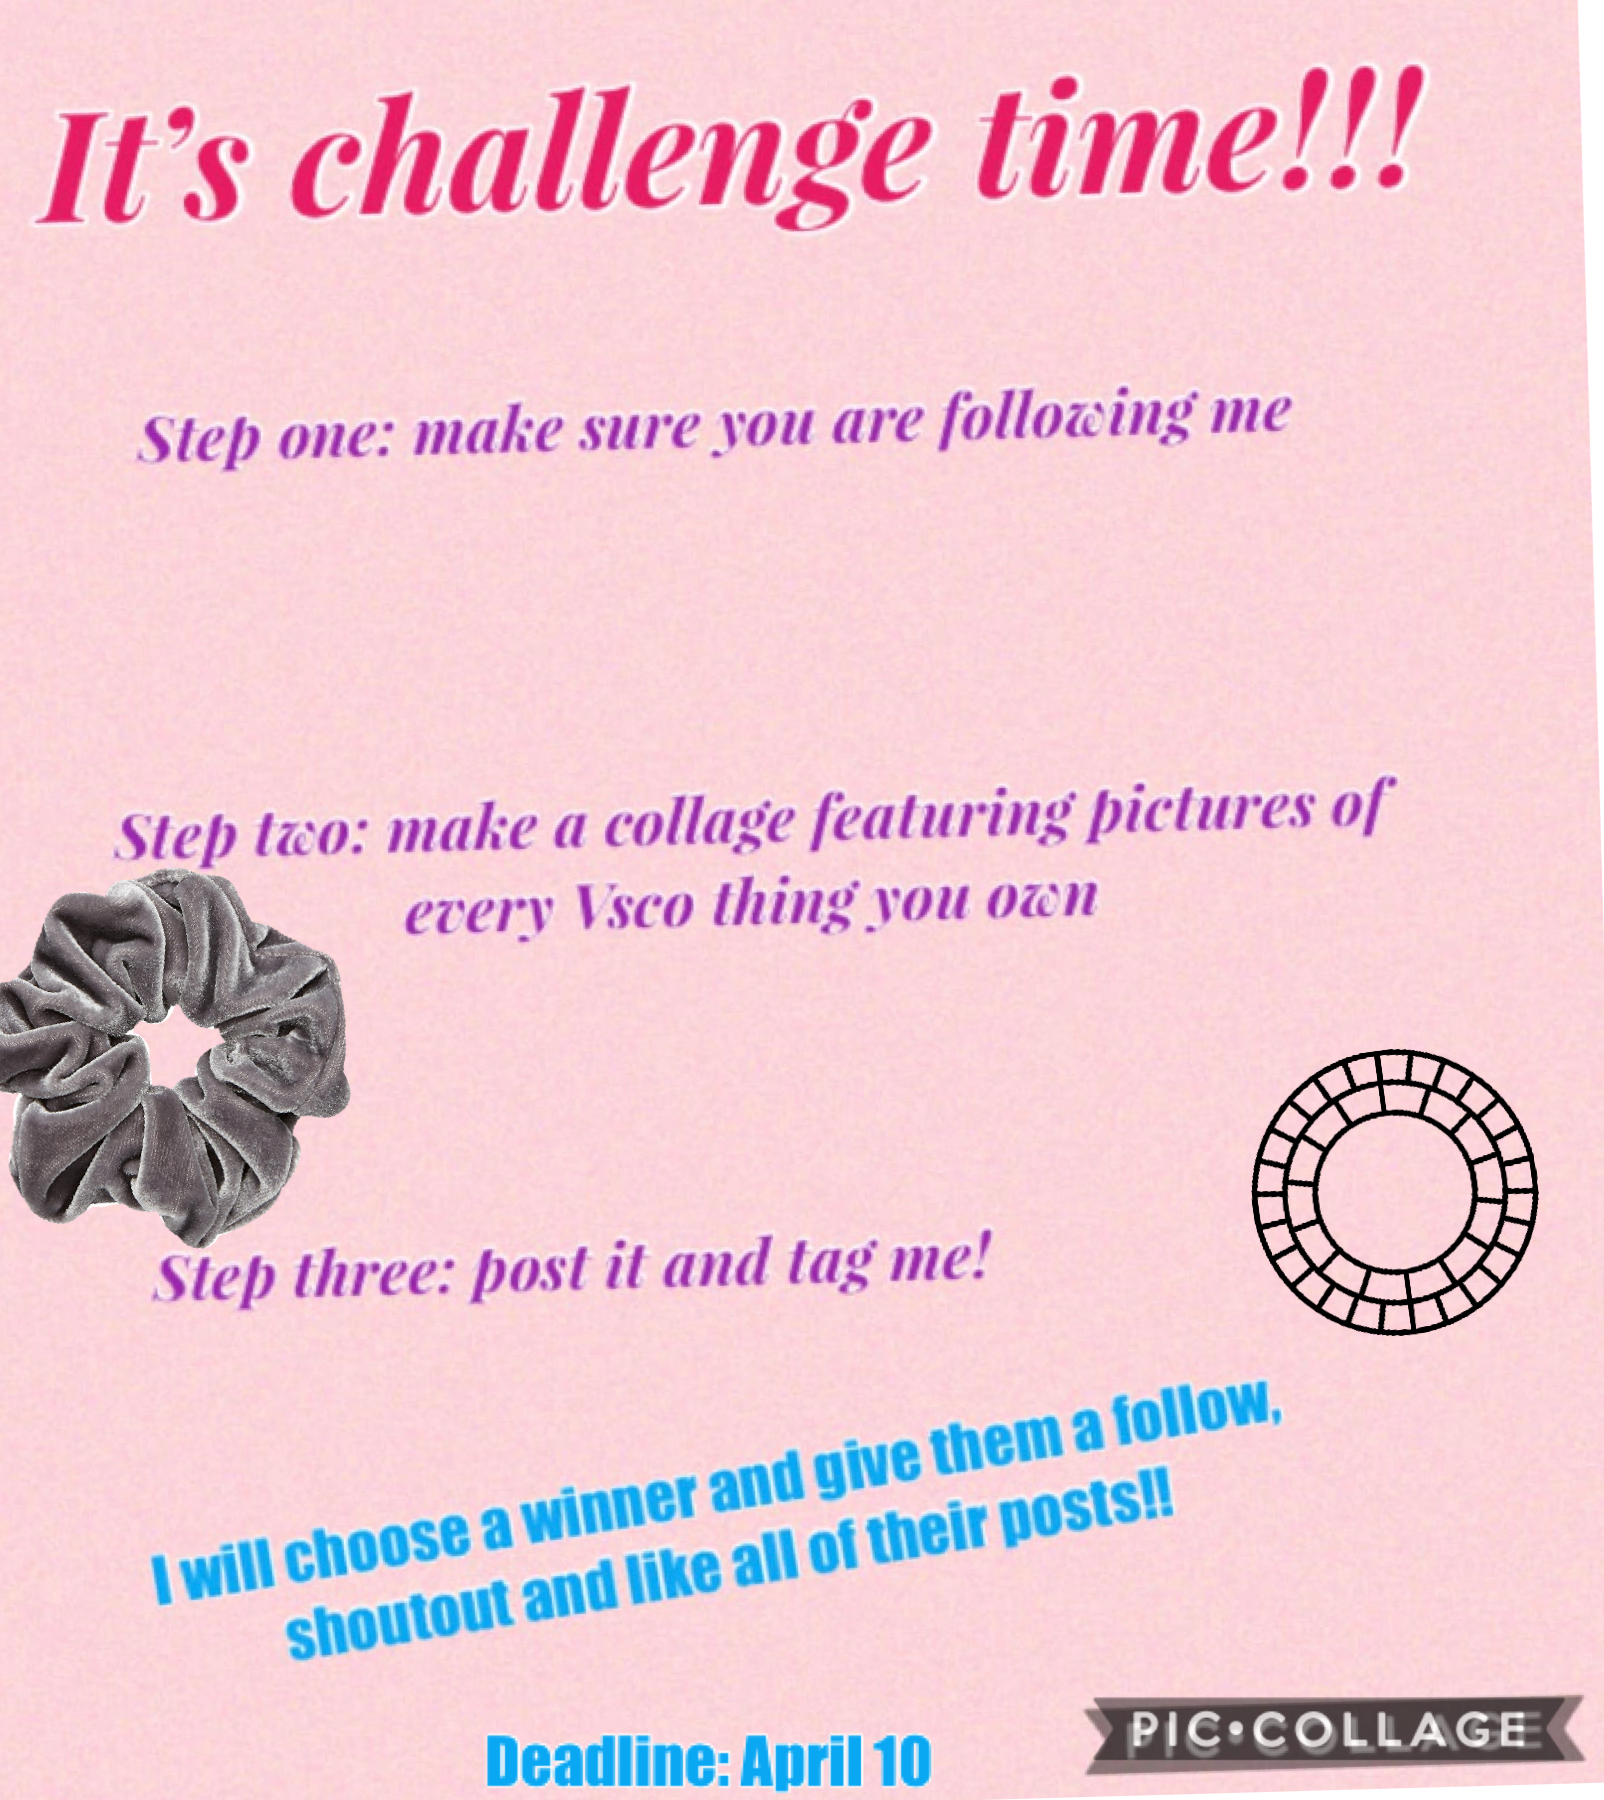 Challenge time!!!